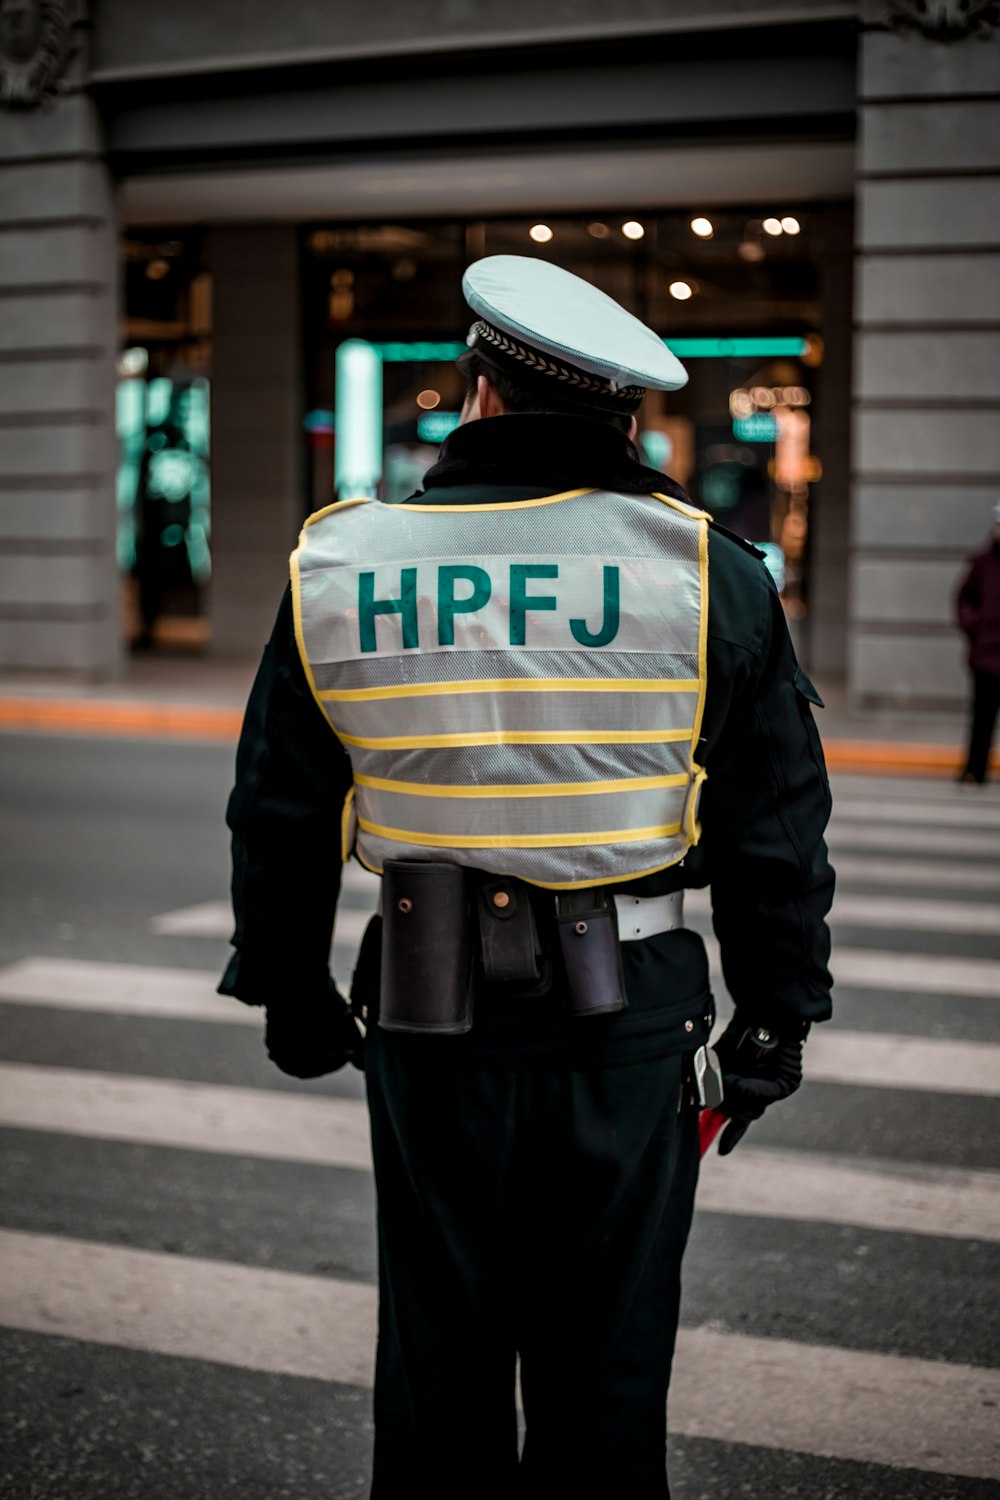 man wearing black and gray HPFJ suit standing on crosswalk closeup pho o